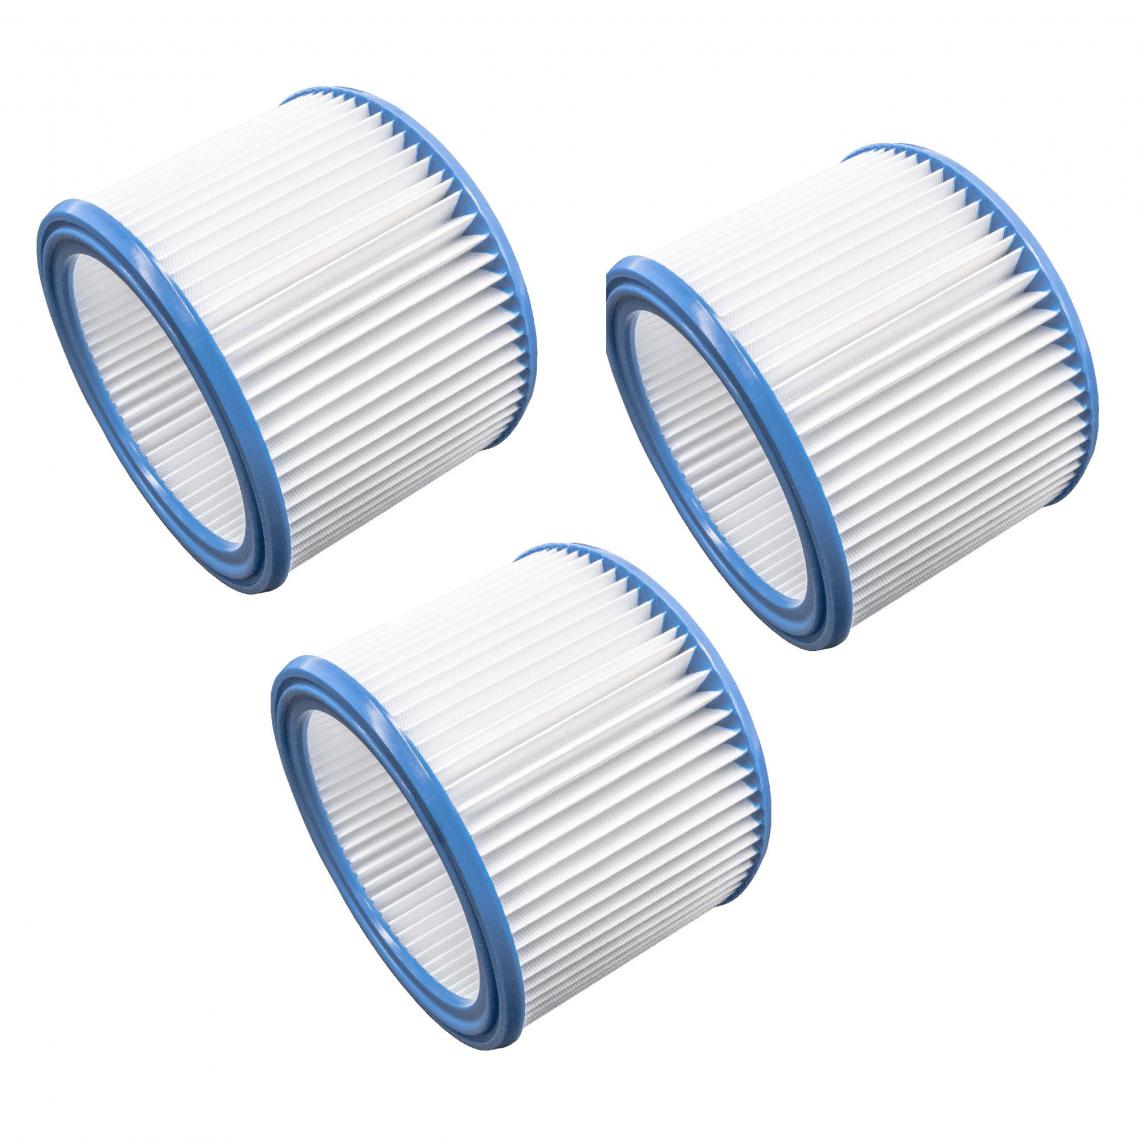 Vhbw - vhbw Set de filtres 3x Filtre plissé compatible avec Nilfisk Aero 20-01, 20-01 Inox, 20-11, 20-21 aspirateur à sec ou humide - Filtre à cartouche - Accessoire entretien des sols